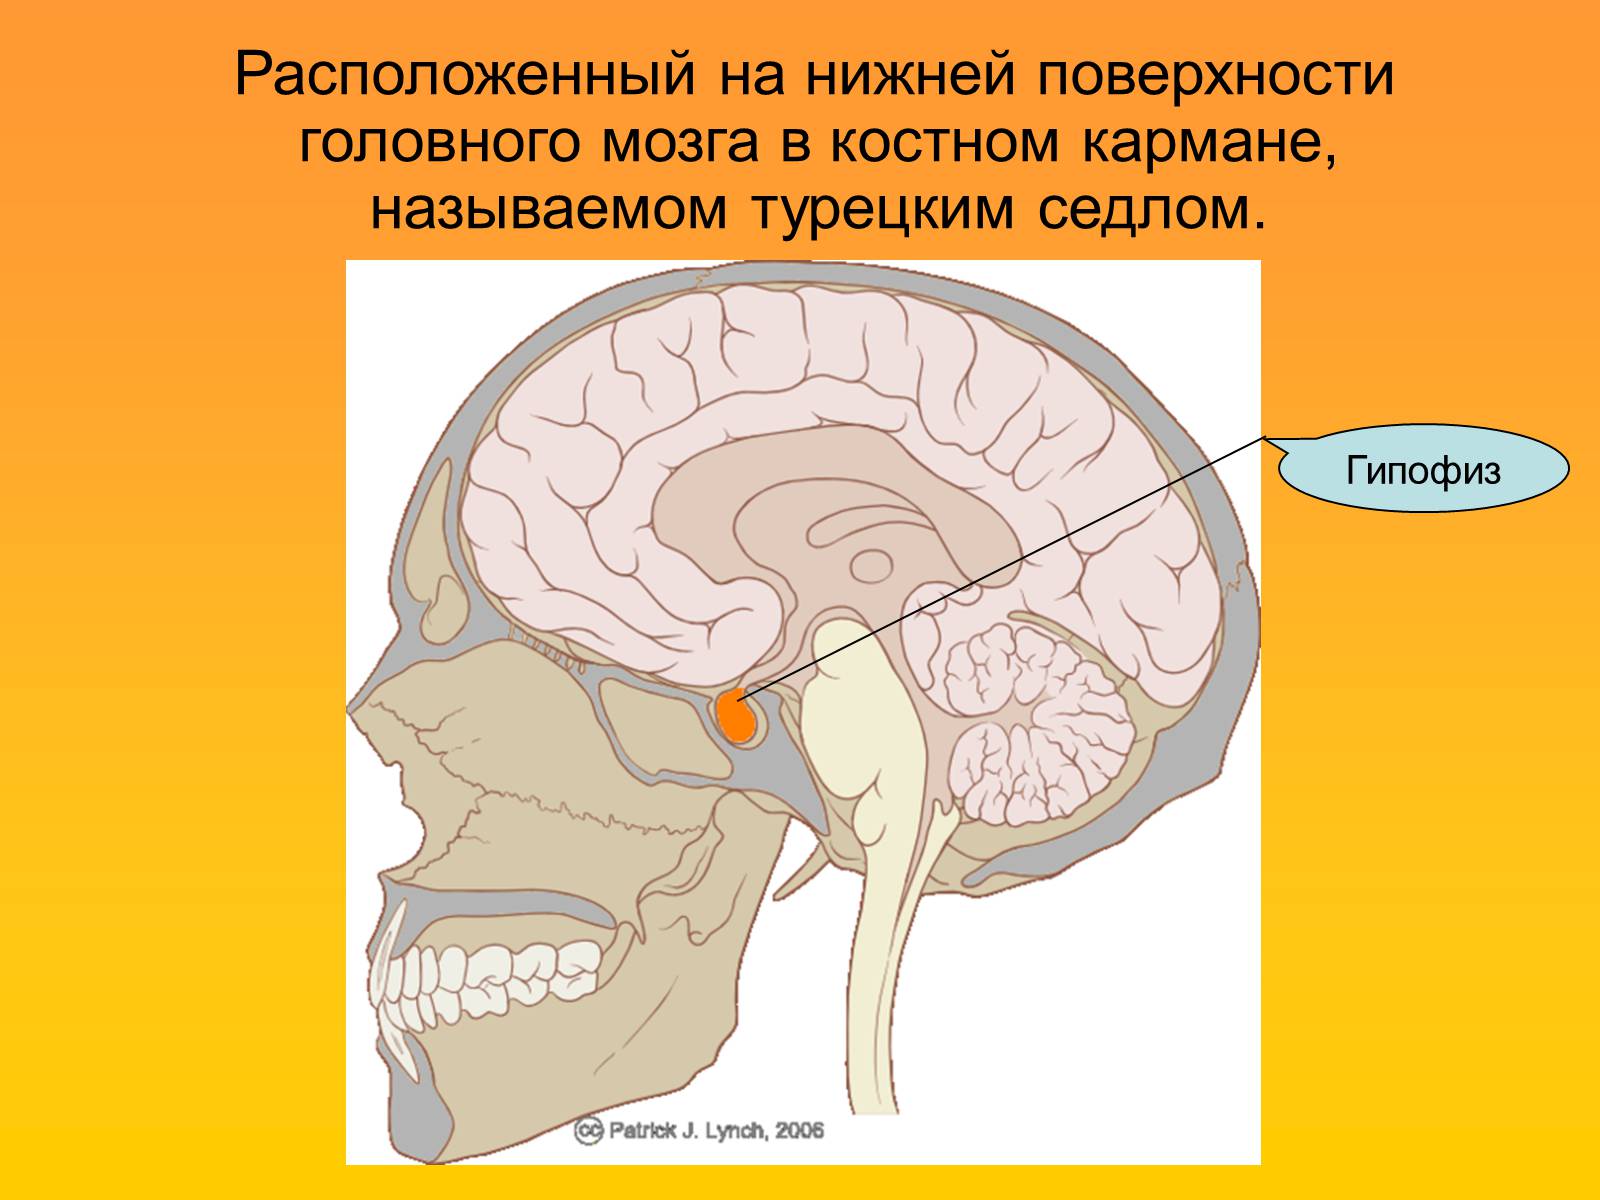 Гипофиз в каком мозге. Гипофиз головного мозга. Гипофиз расположение. Расположение гипофиза в головном мозге. Расположение гипофиза в головном мозге анатомия.